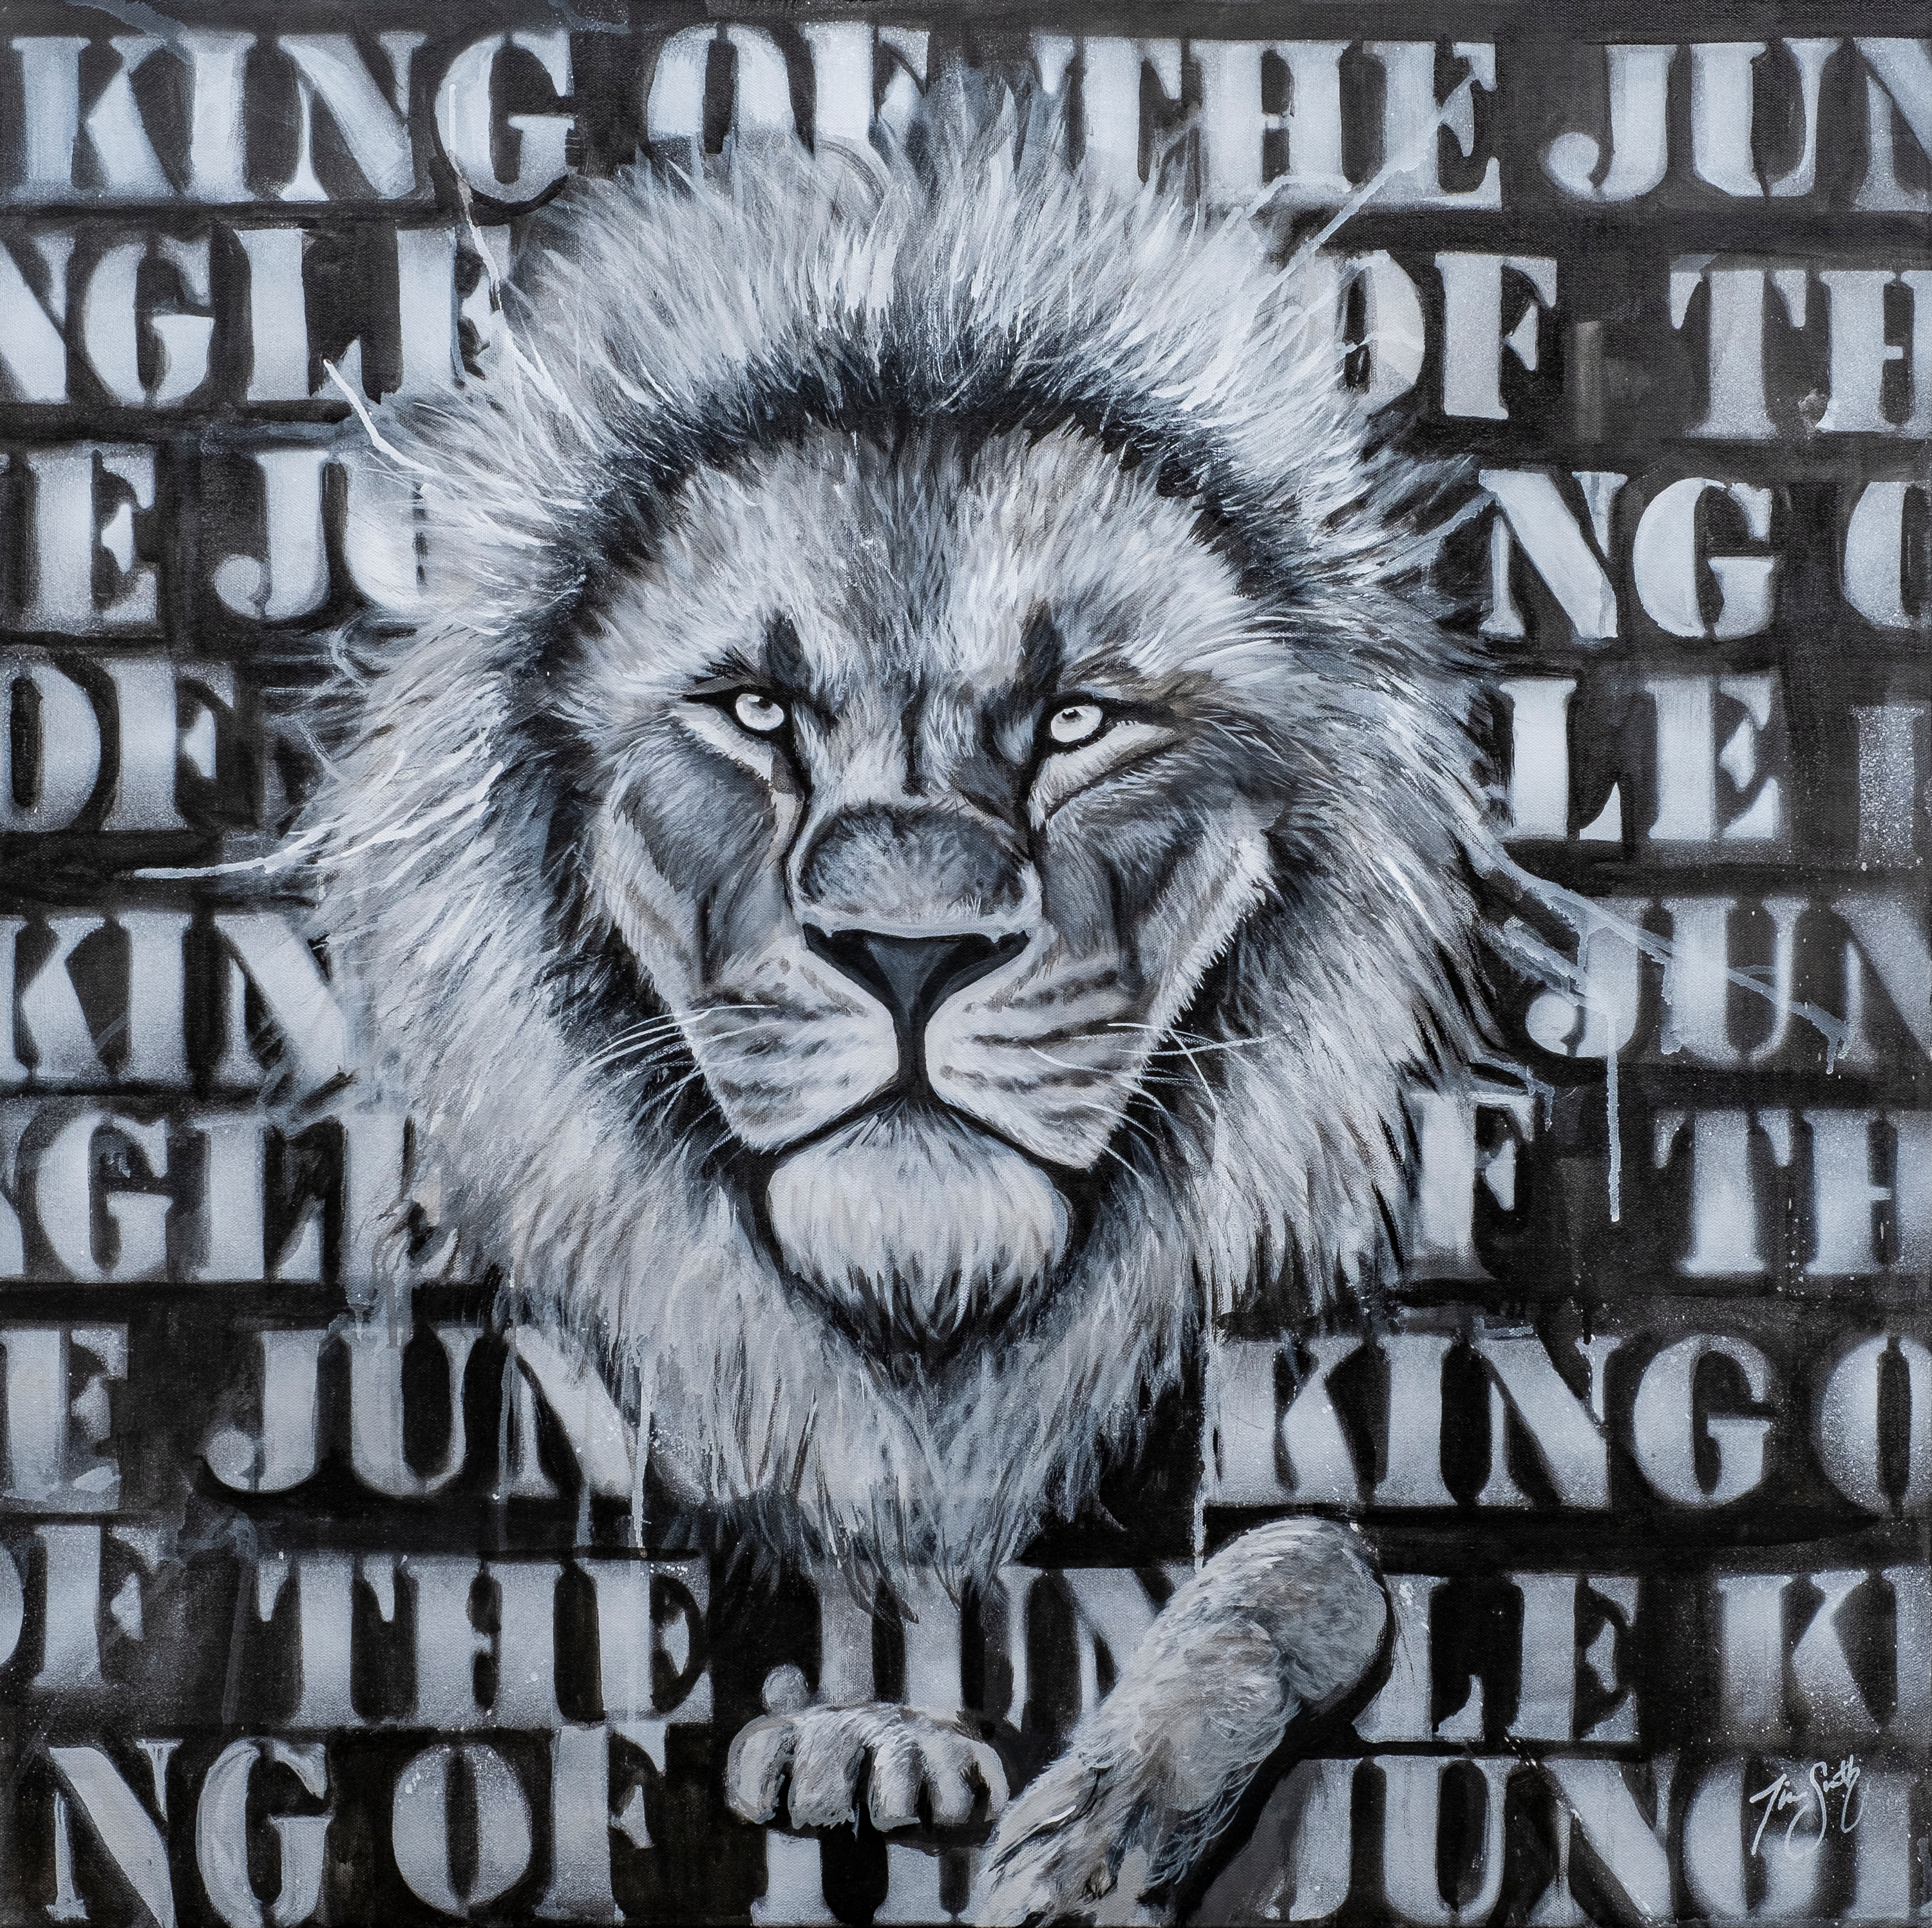 King of the jungle r8ah9b